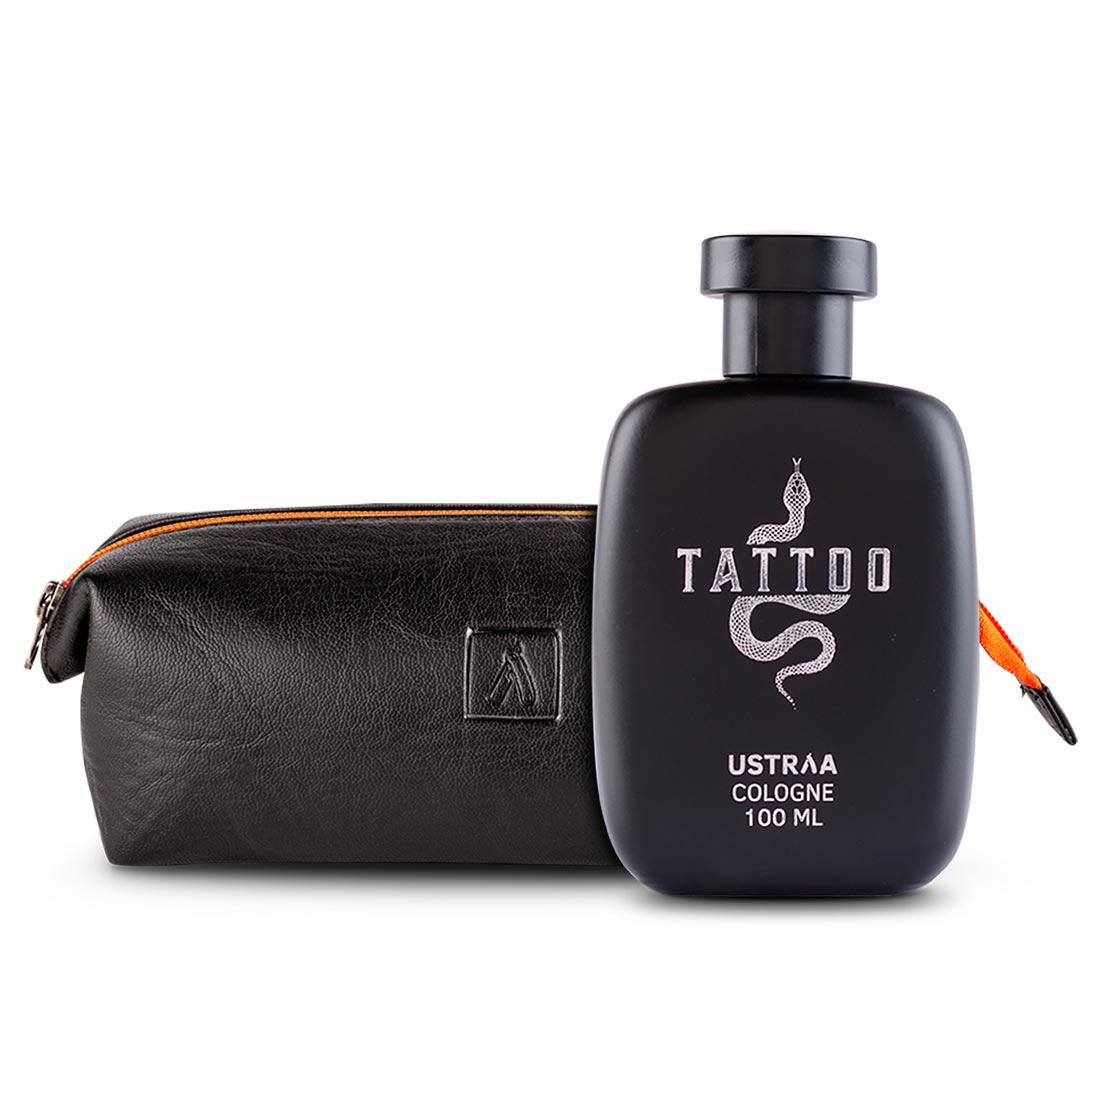 Tattoo Cologne and PU kit Bag